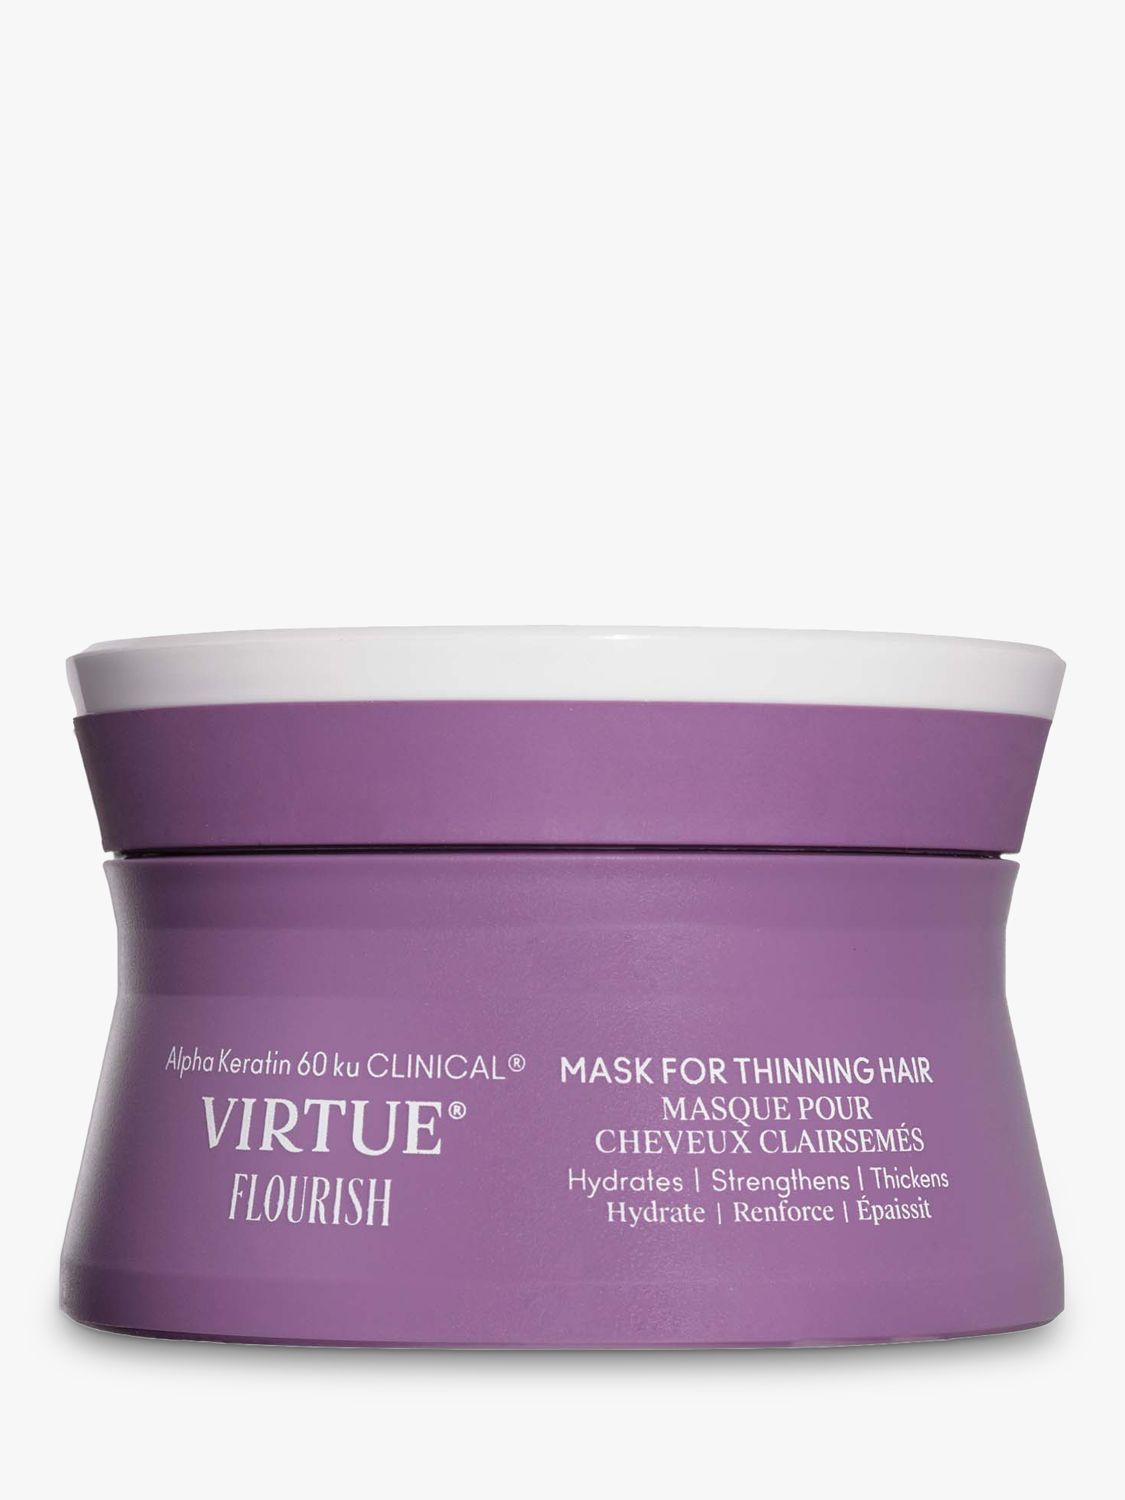 Virtue Flourish Mask for Thinning Hair, 150ml 1